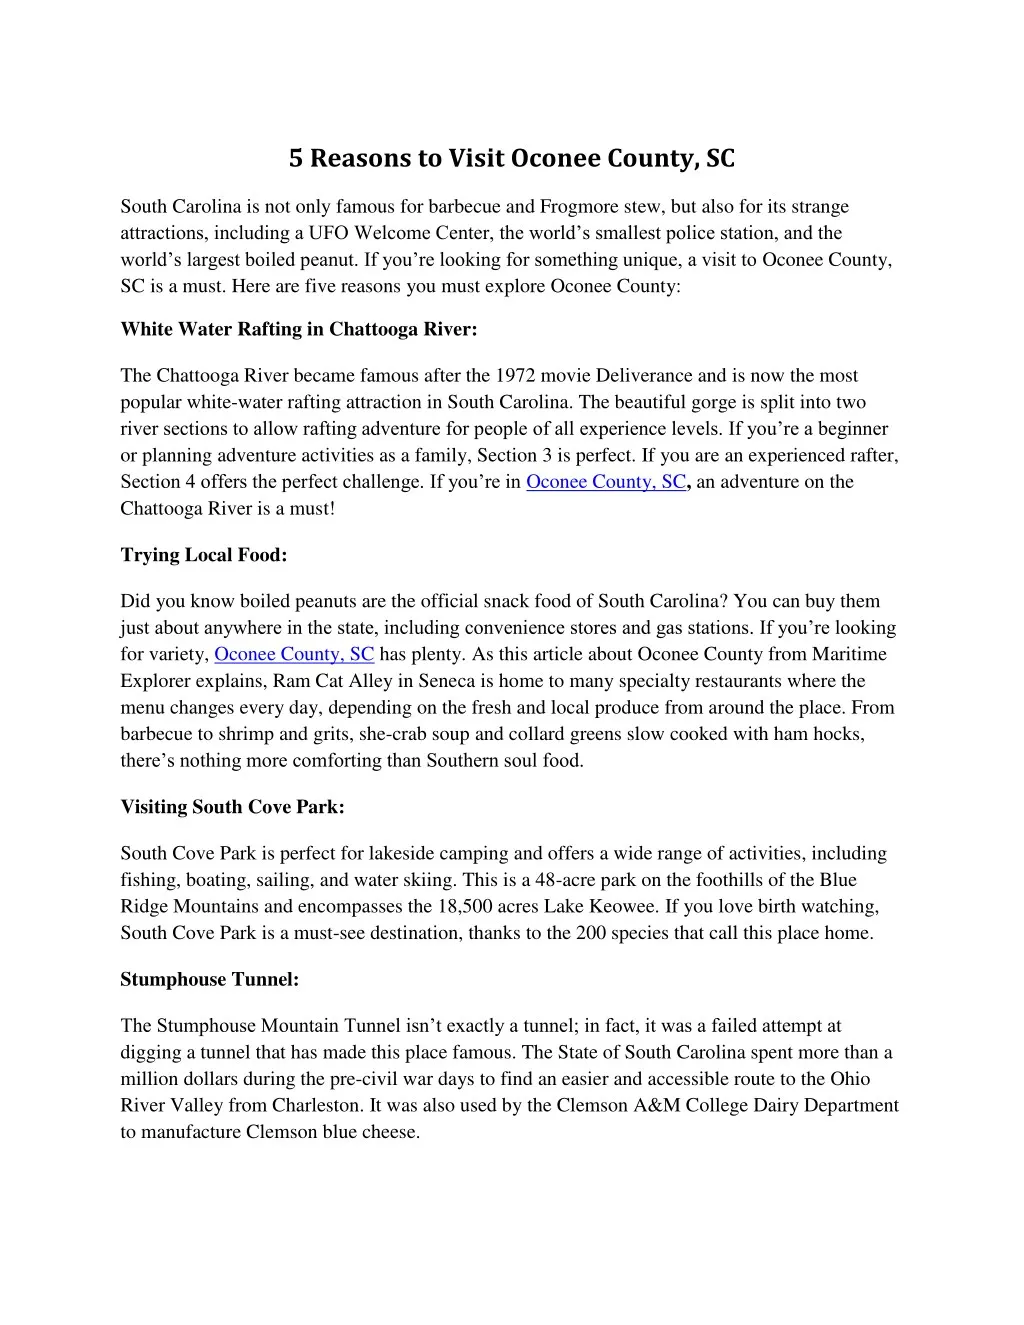 5 reasons to visit oconee county sc